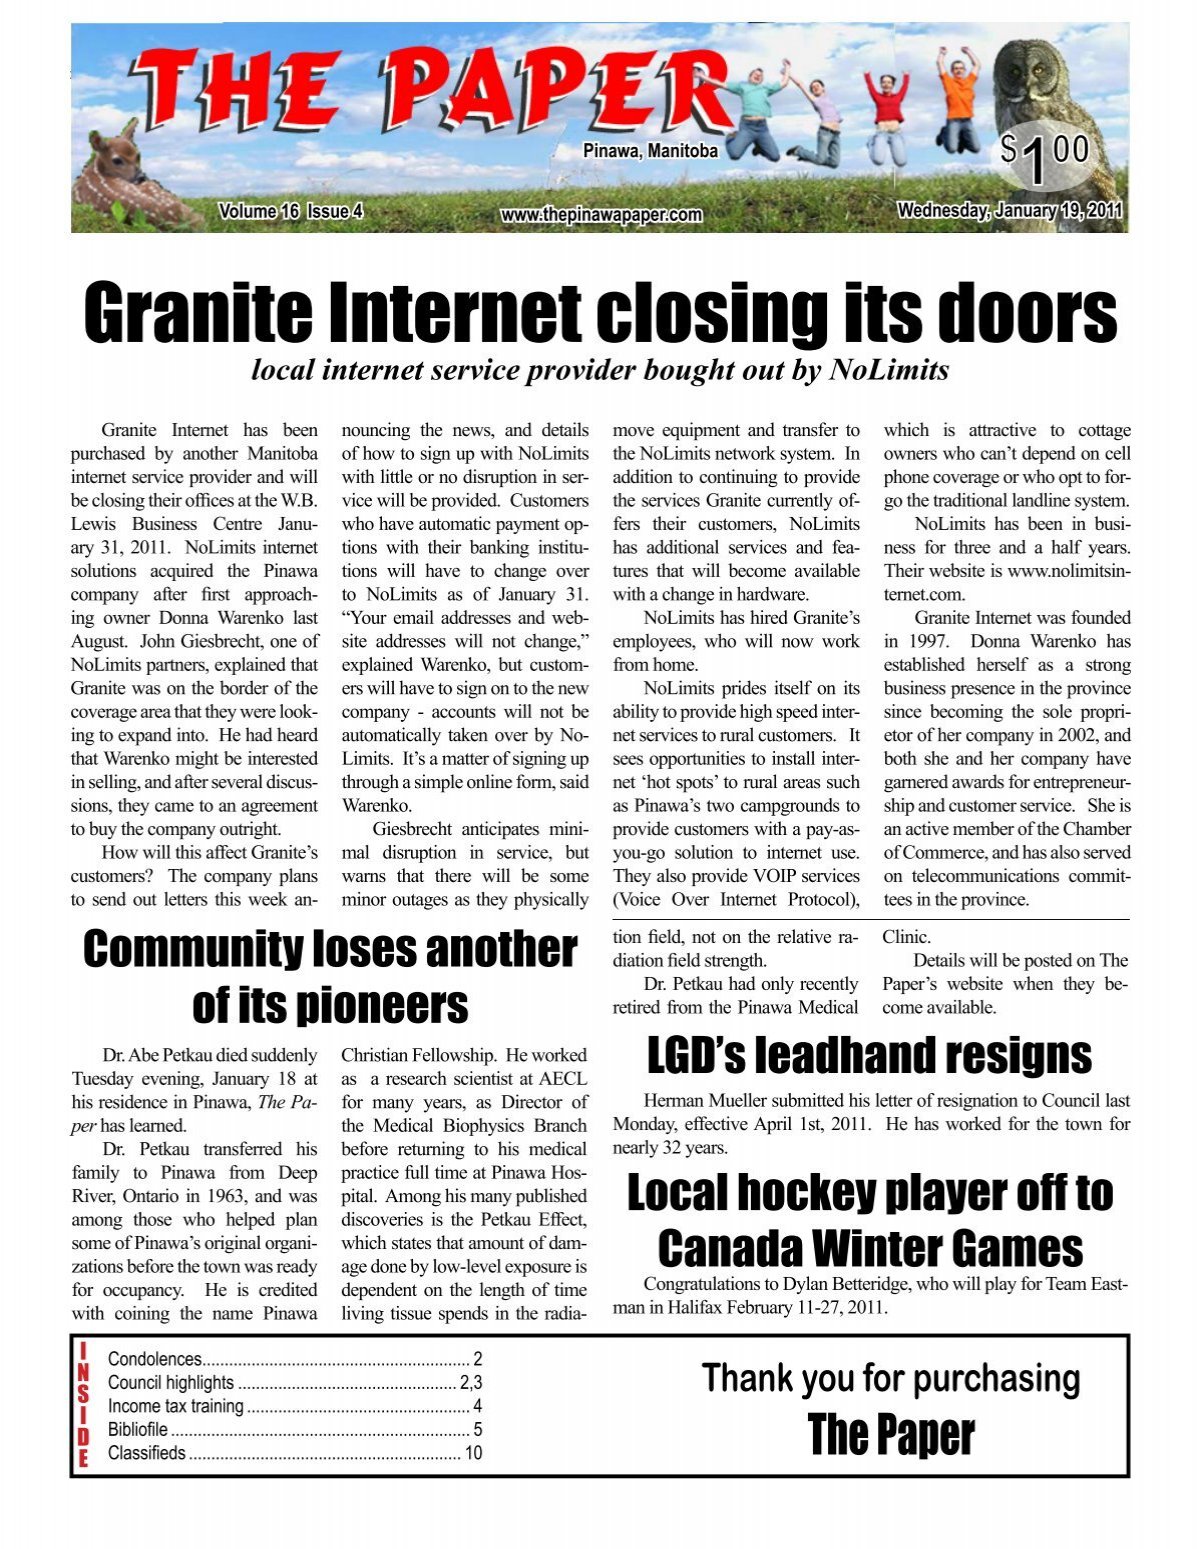 Granite Internet Closing Its Doors Pinawa The Paper